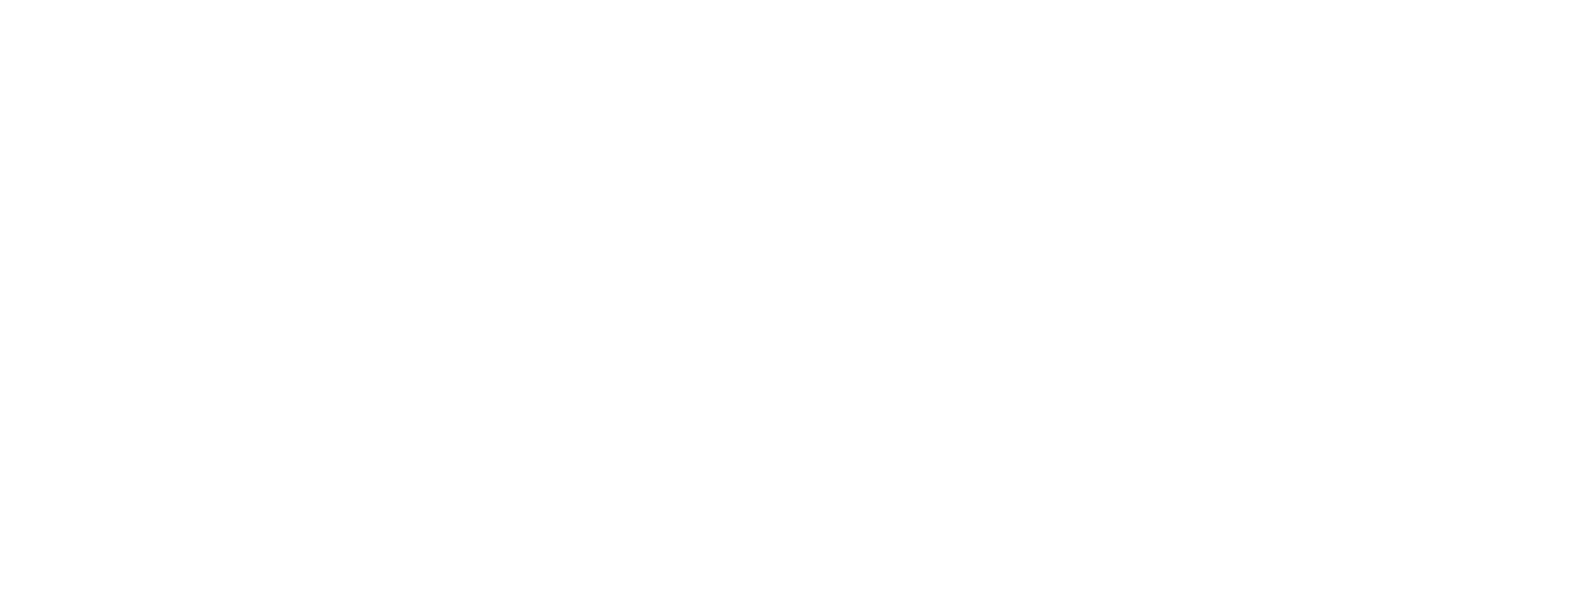 Movida Participações logo large for dark backgrounds (transparent PNG)